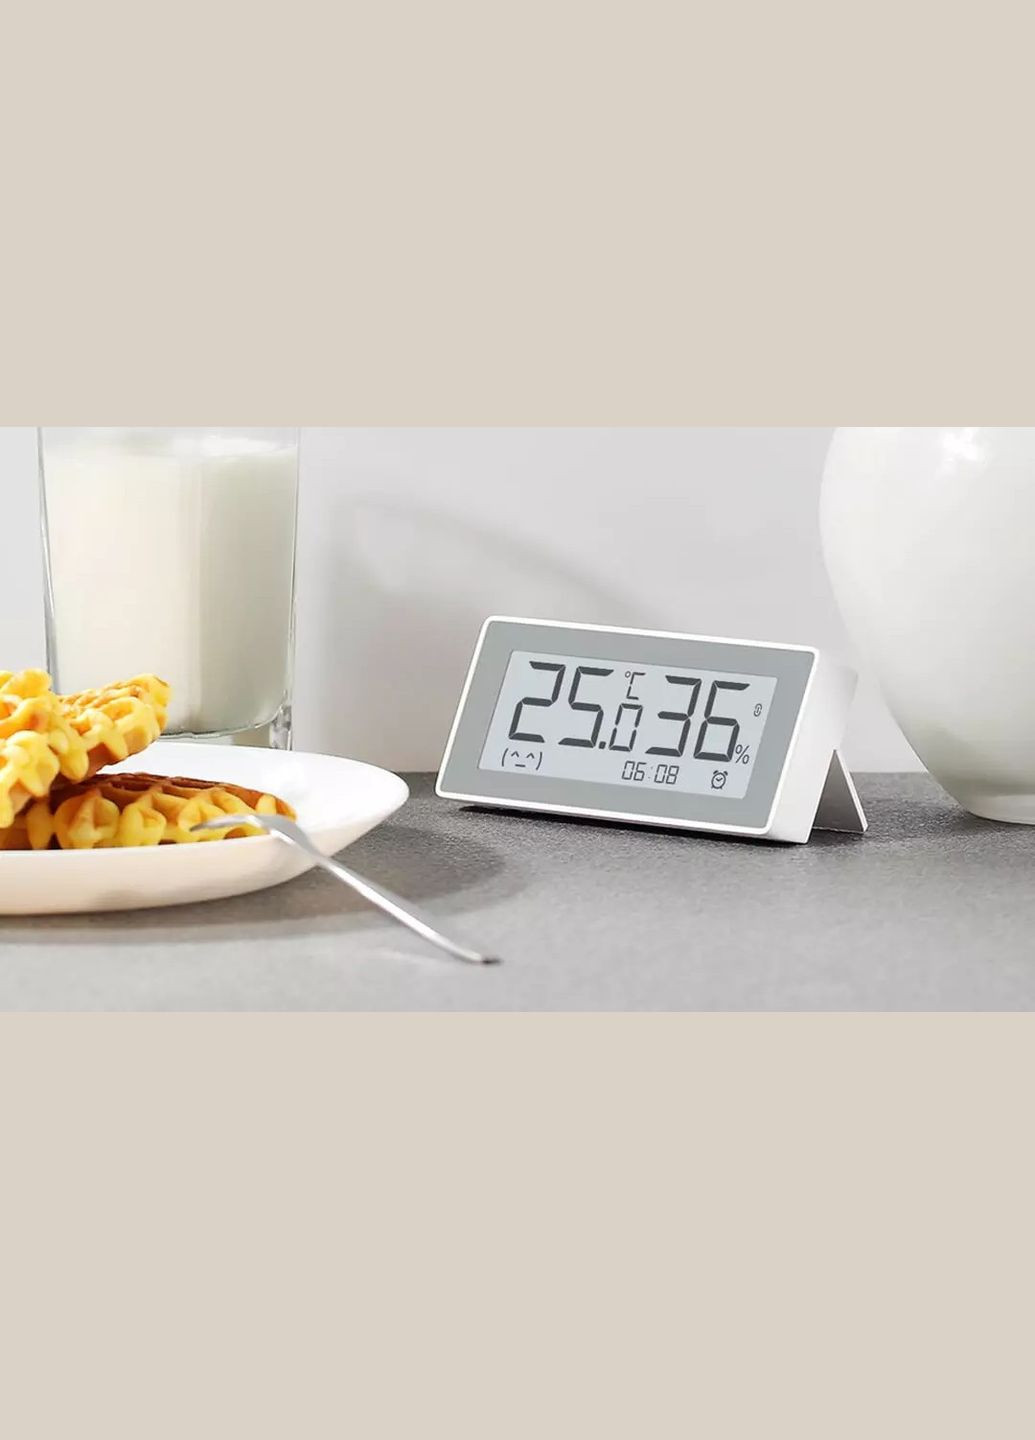 Часы с метеопоказаниями Miaomiaoce Smart clock temperature and humidity meter MHOC303 Xiaomi (279554026)